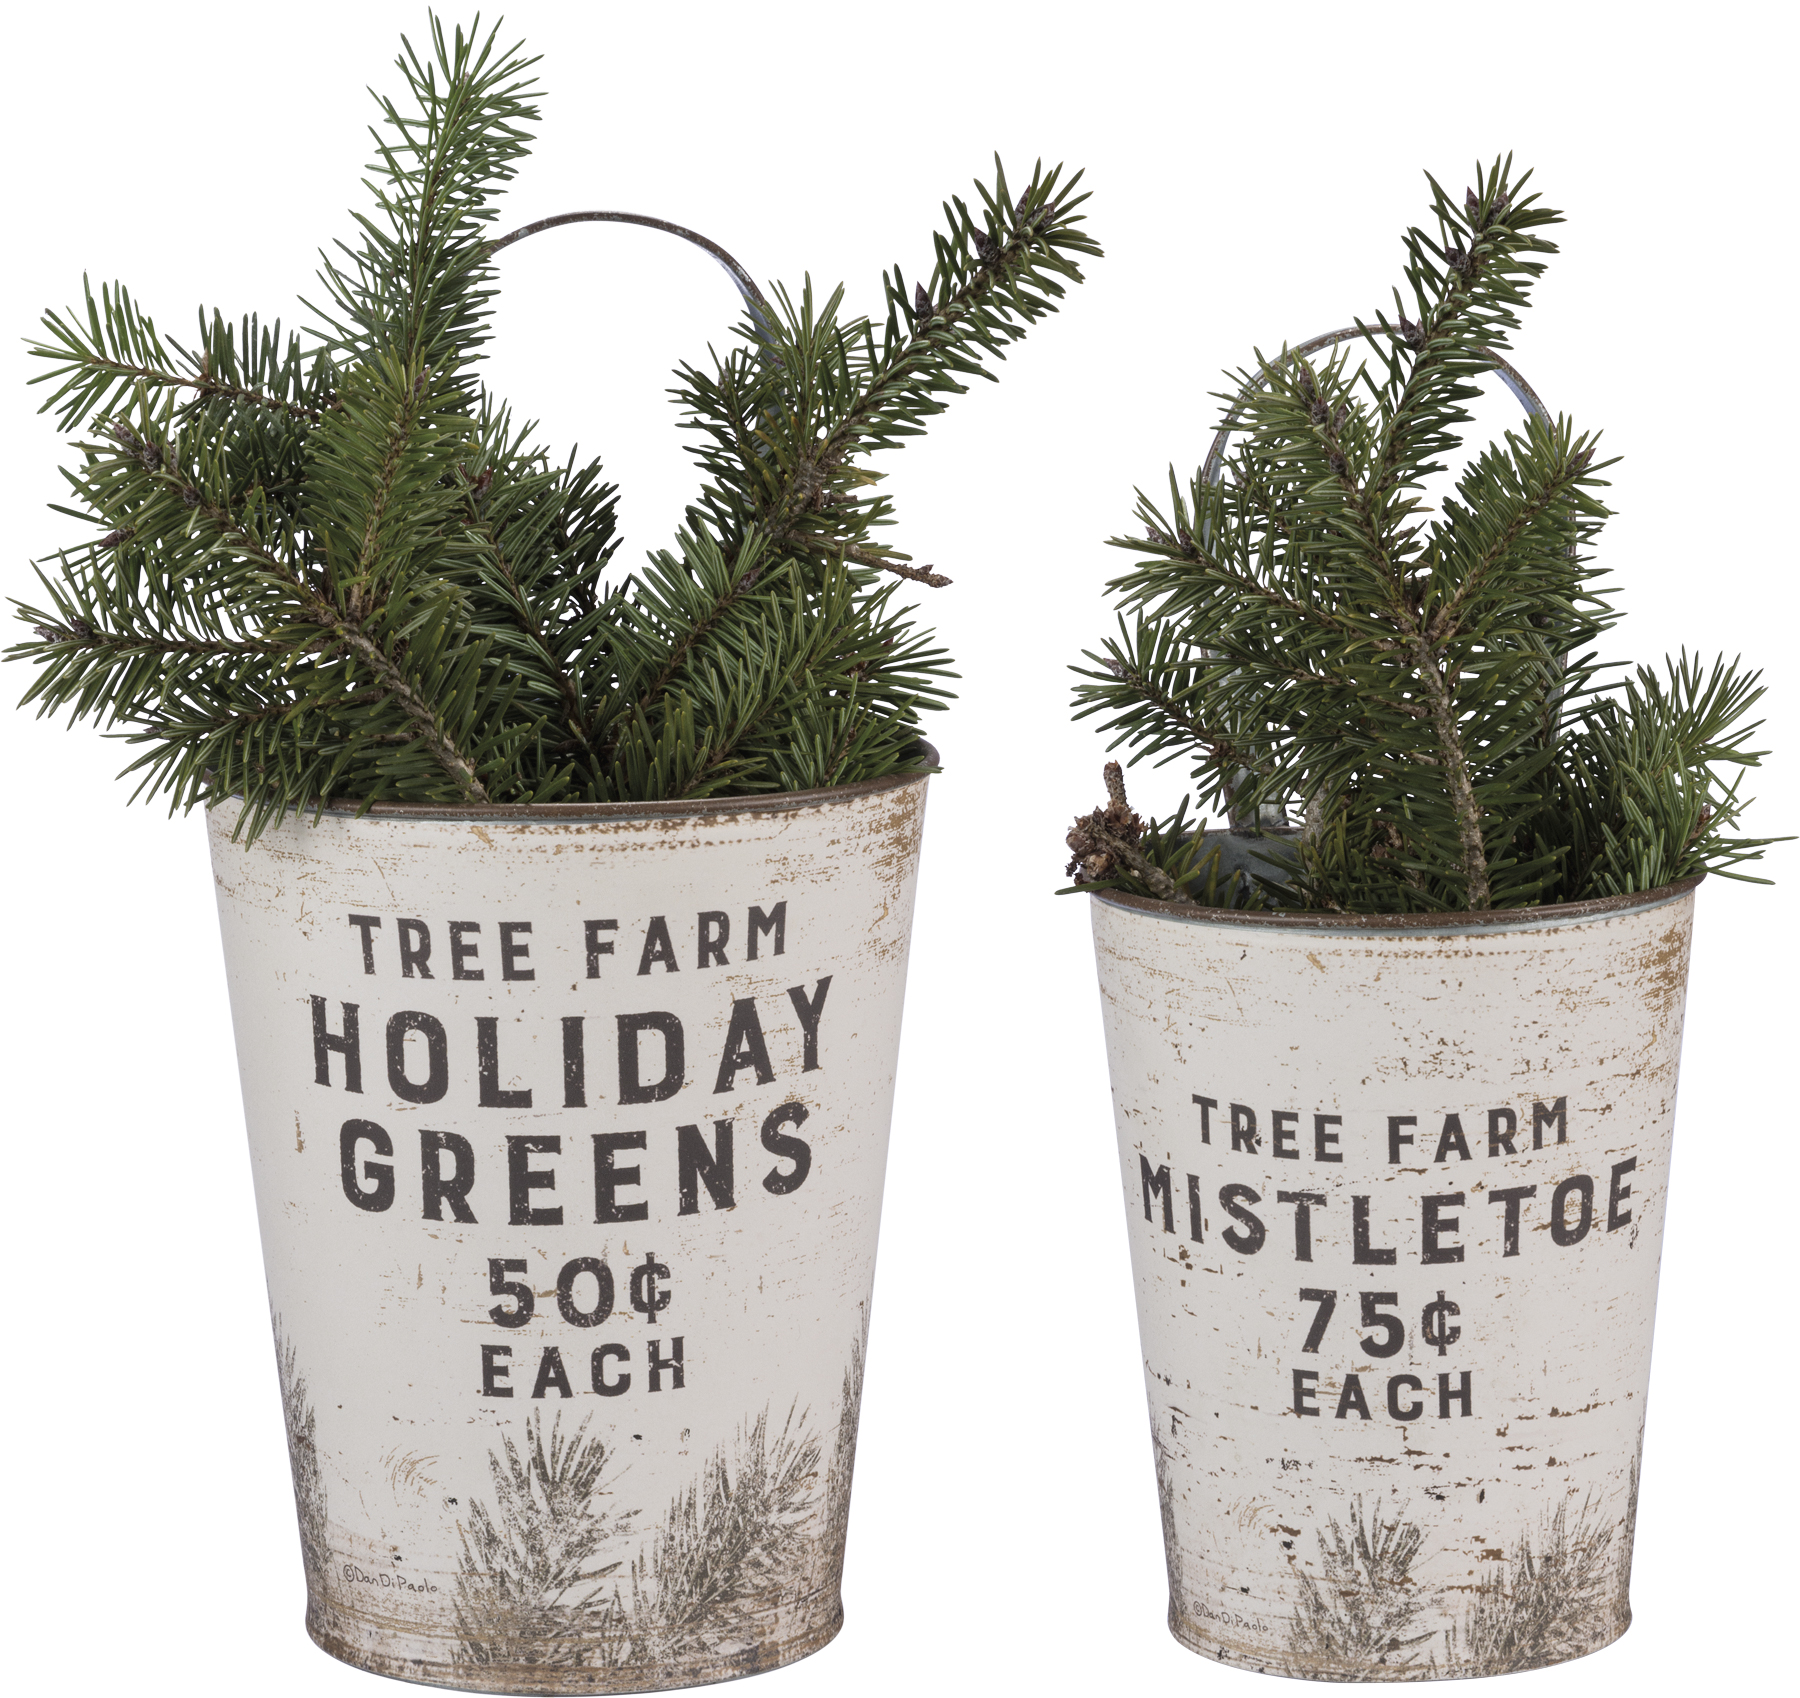 Primitives by Kathy 39896 Farmhouse Tin Buckets Farm Fresh Christmas Trees